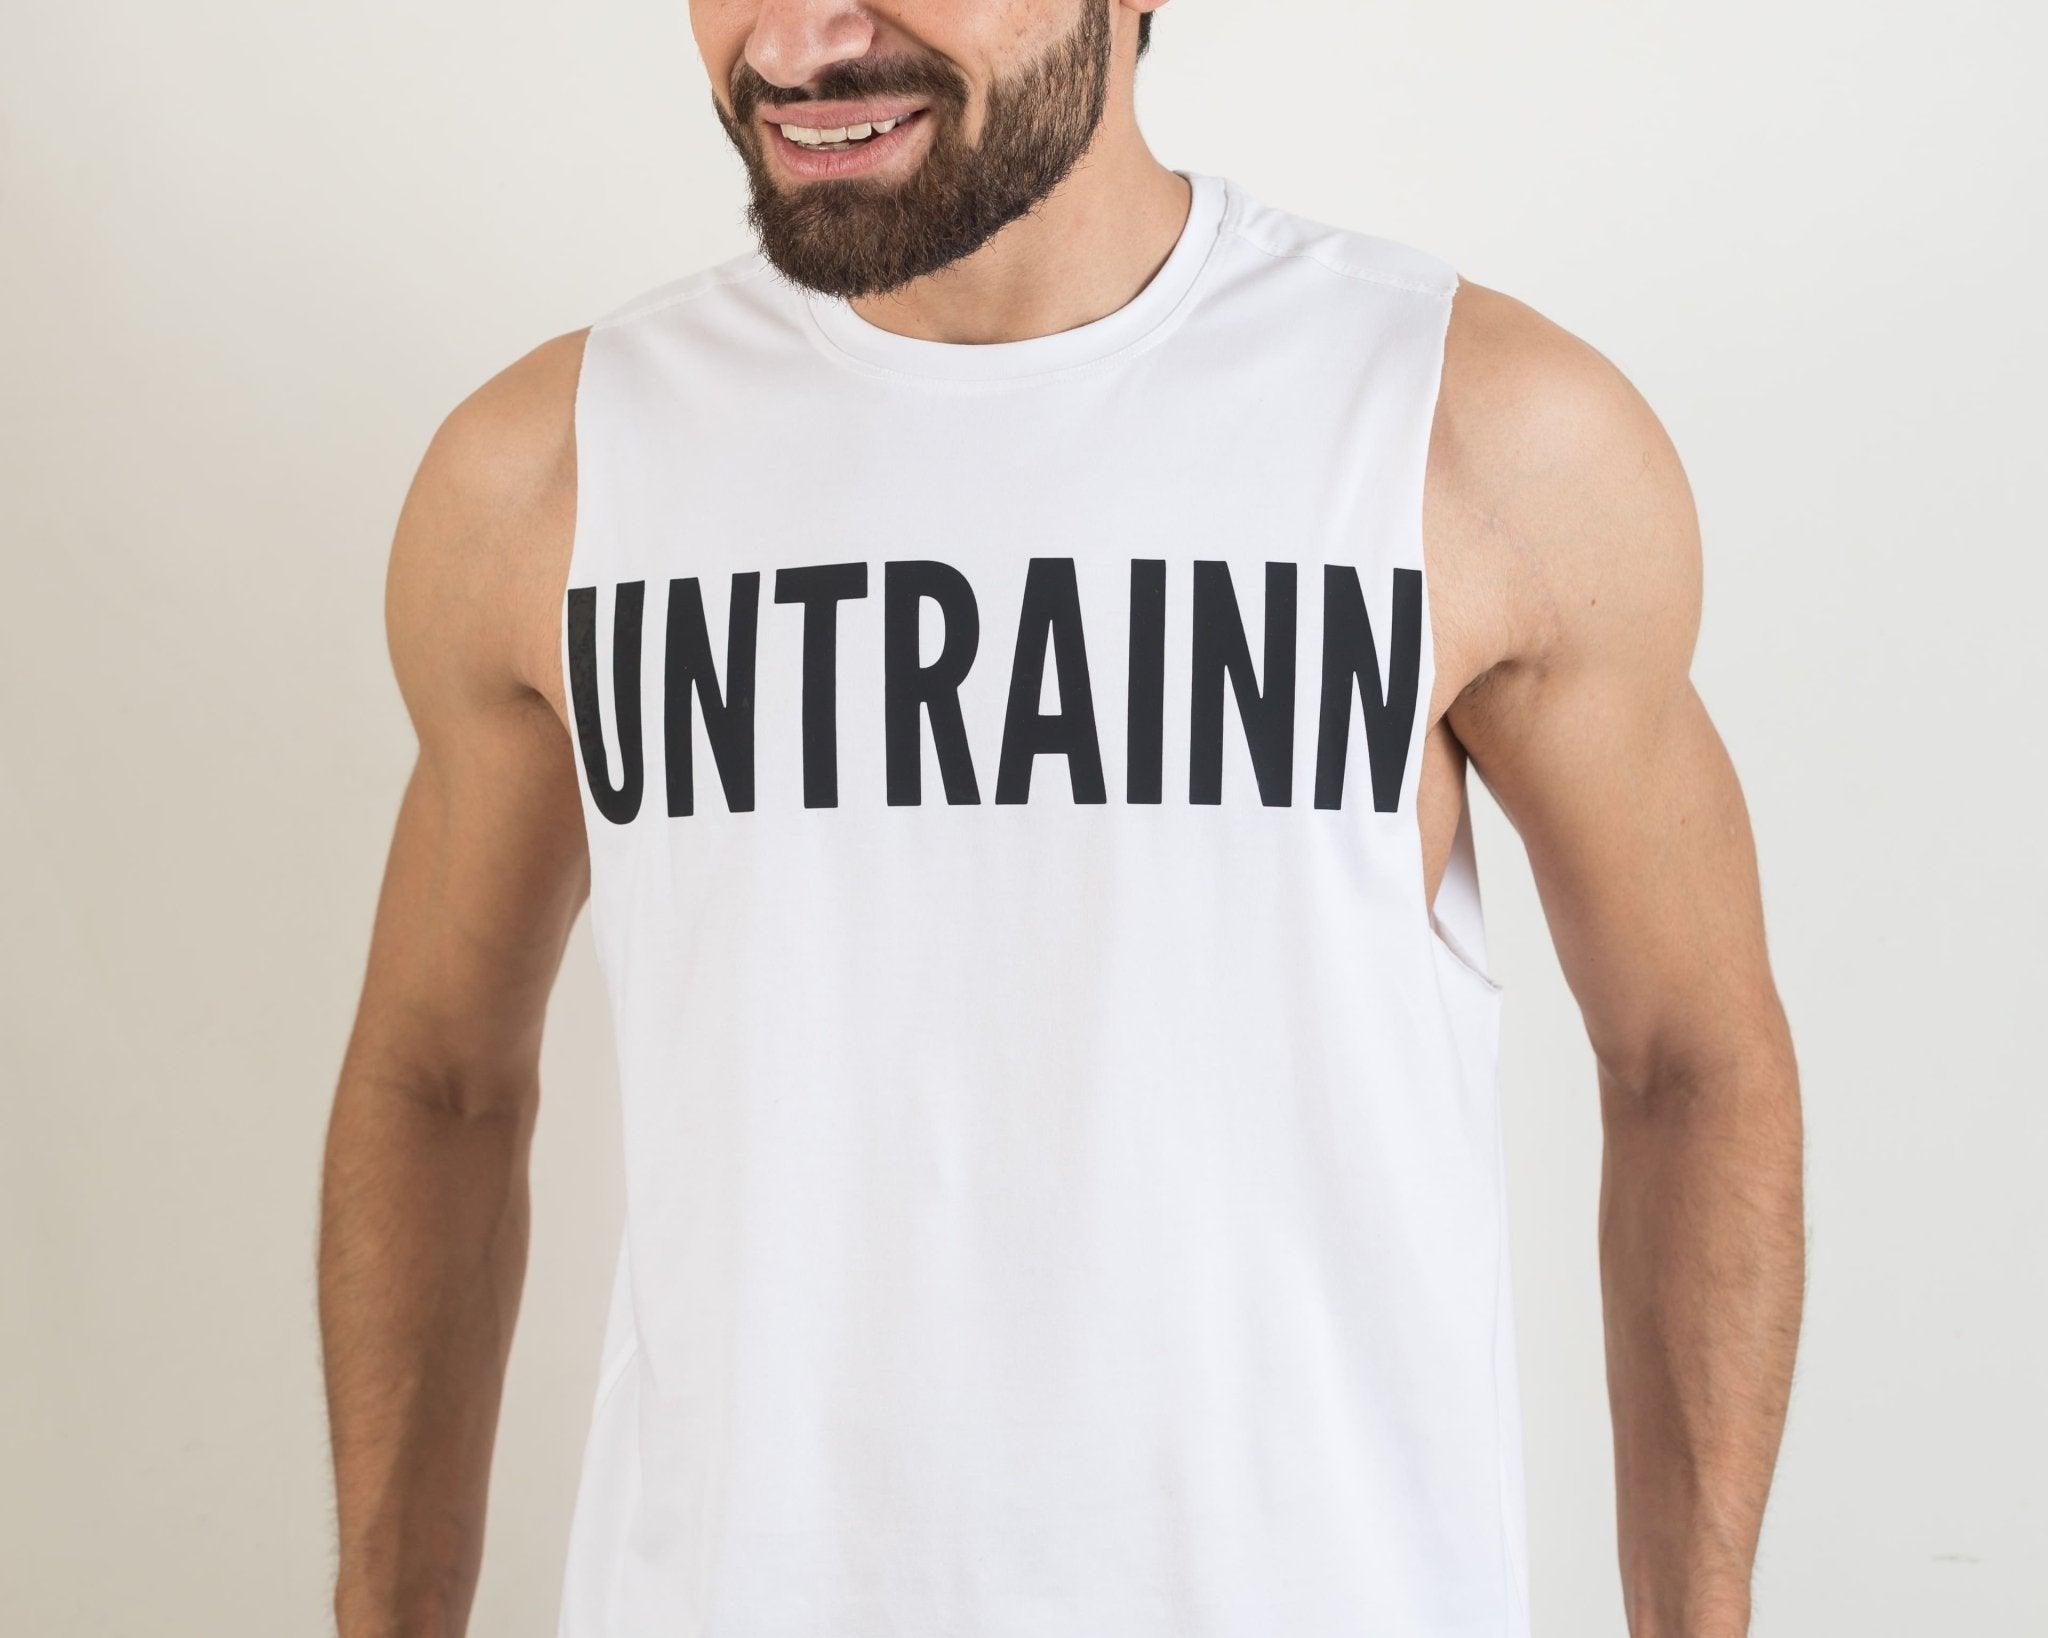 Untrain, Training tank for men